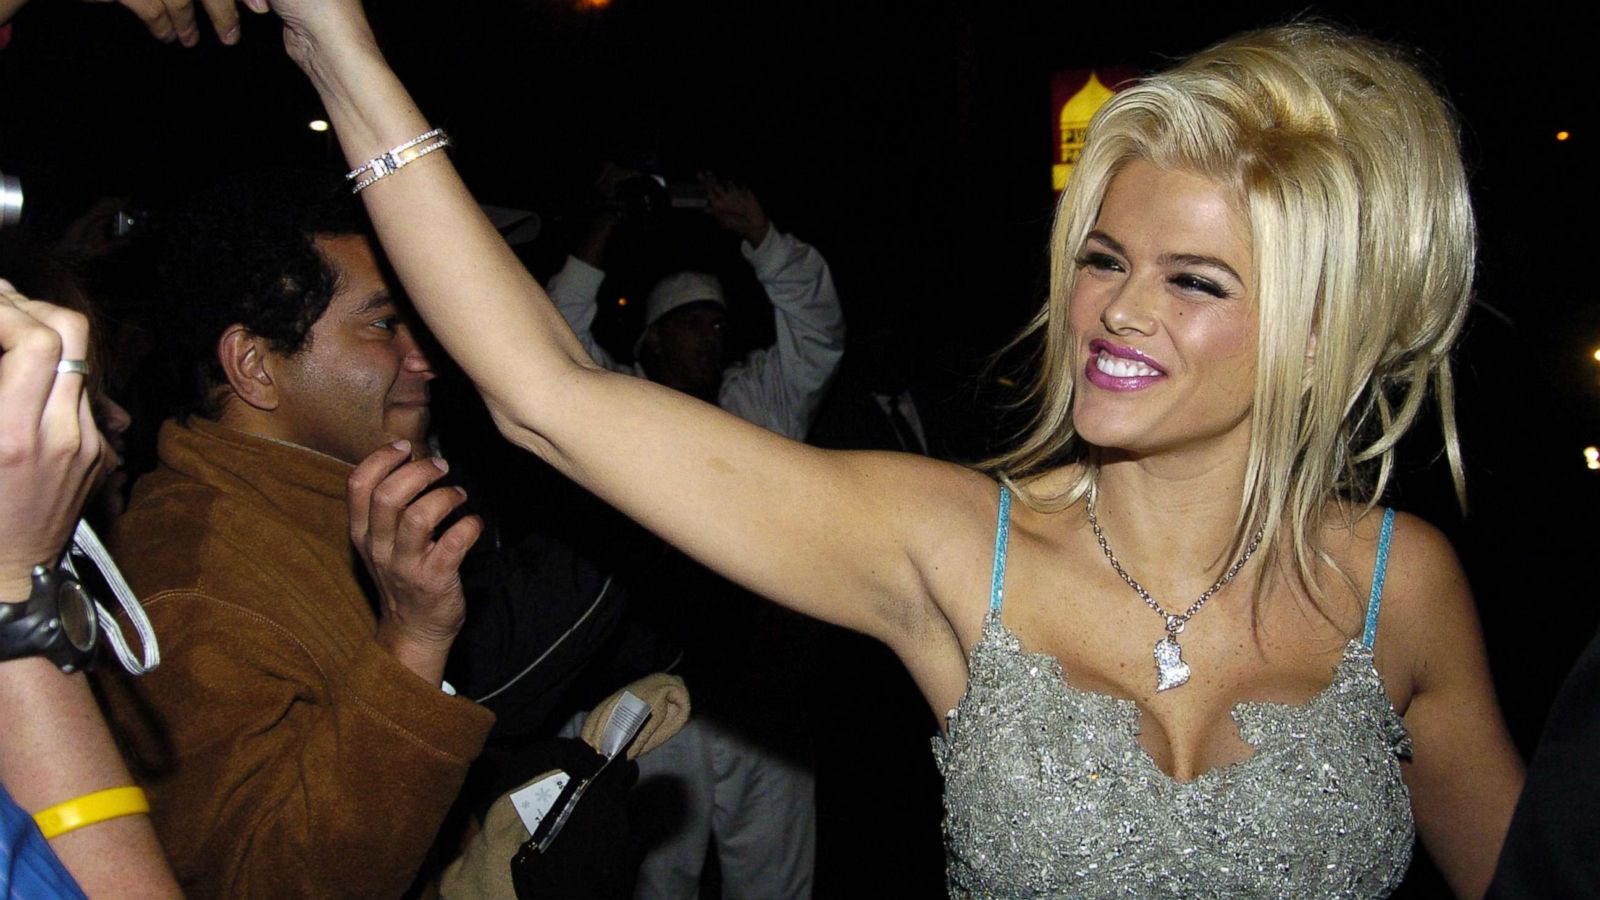 When cameras were off, Anna Nicole Smith was still Vicki Lynn